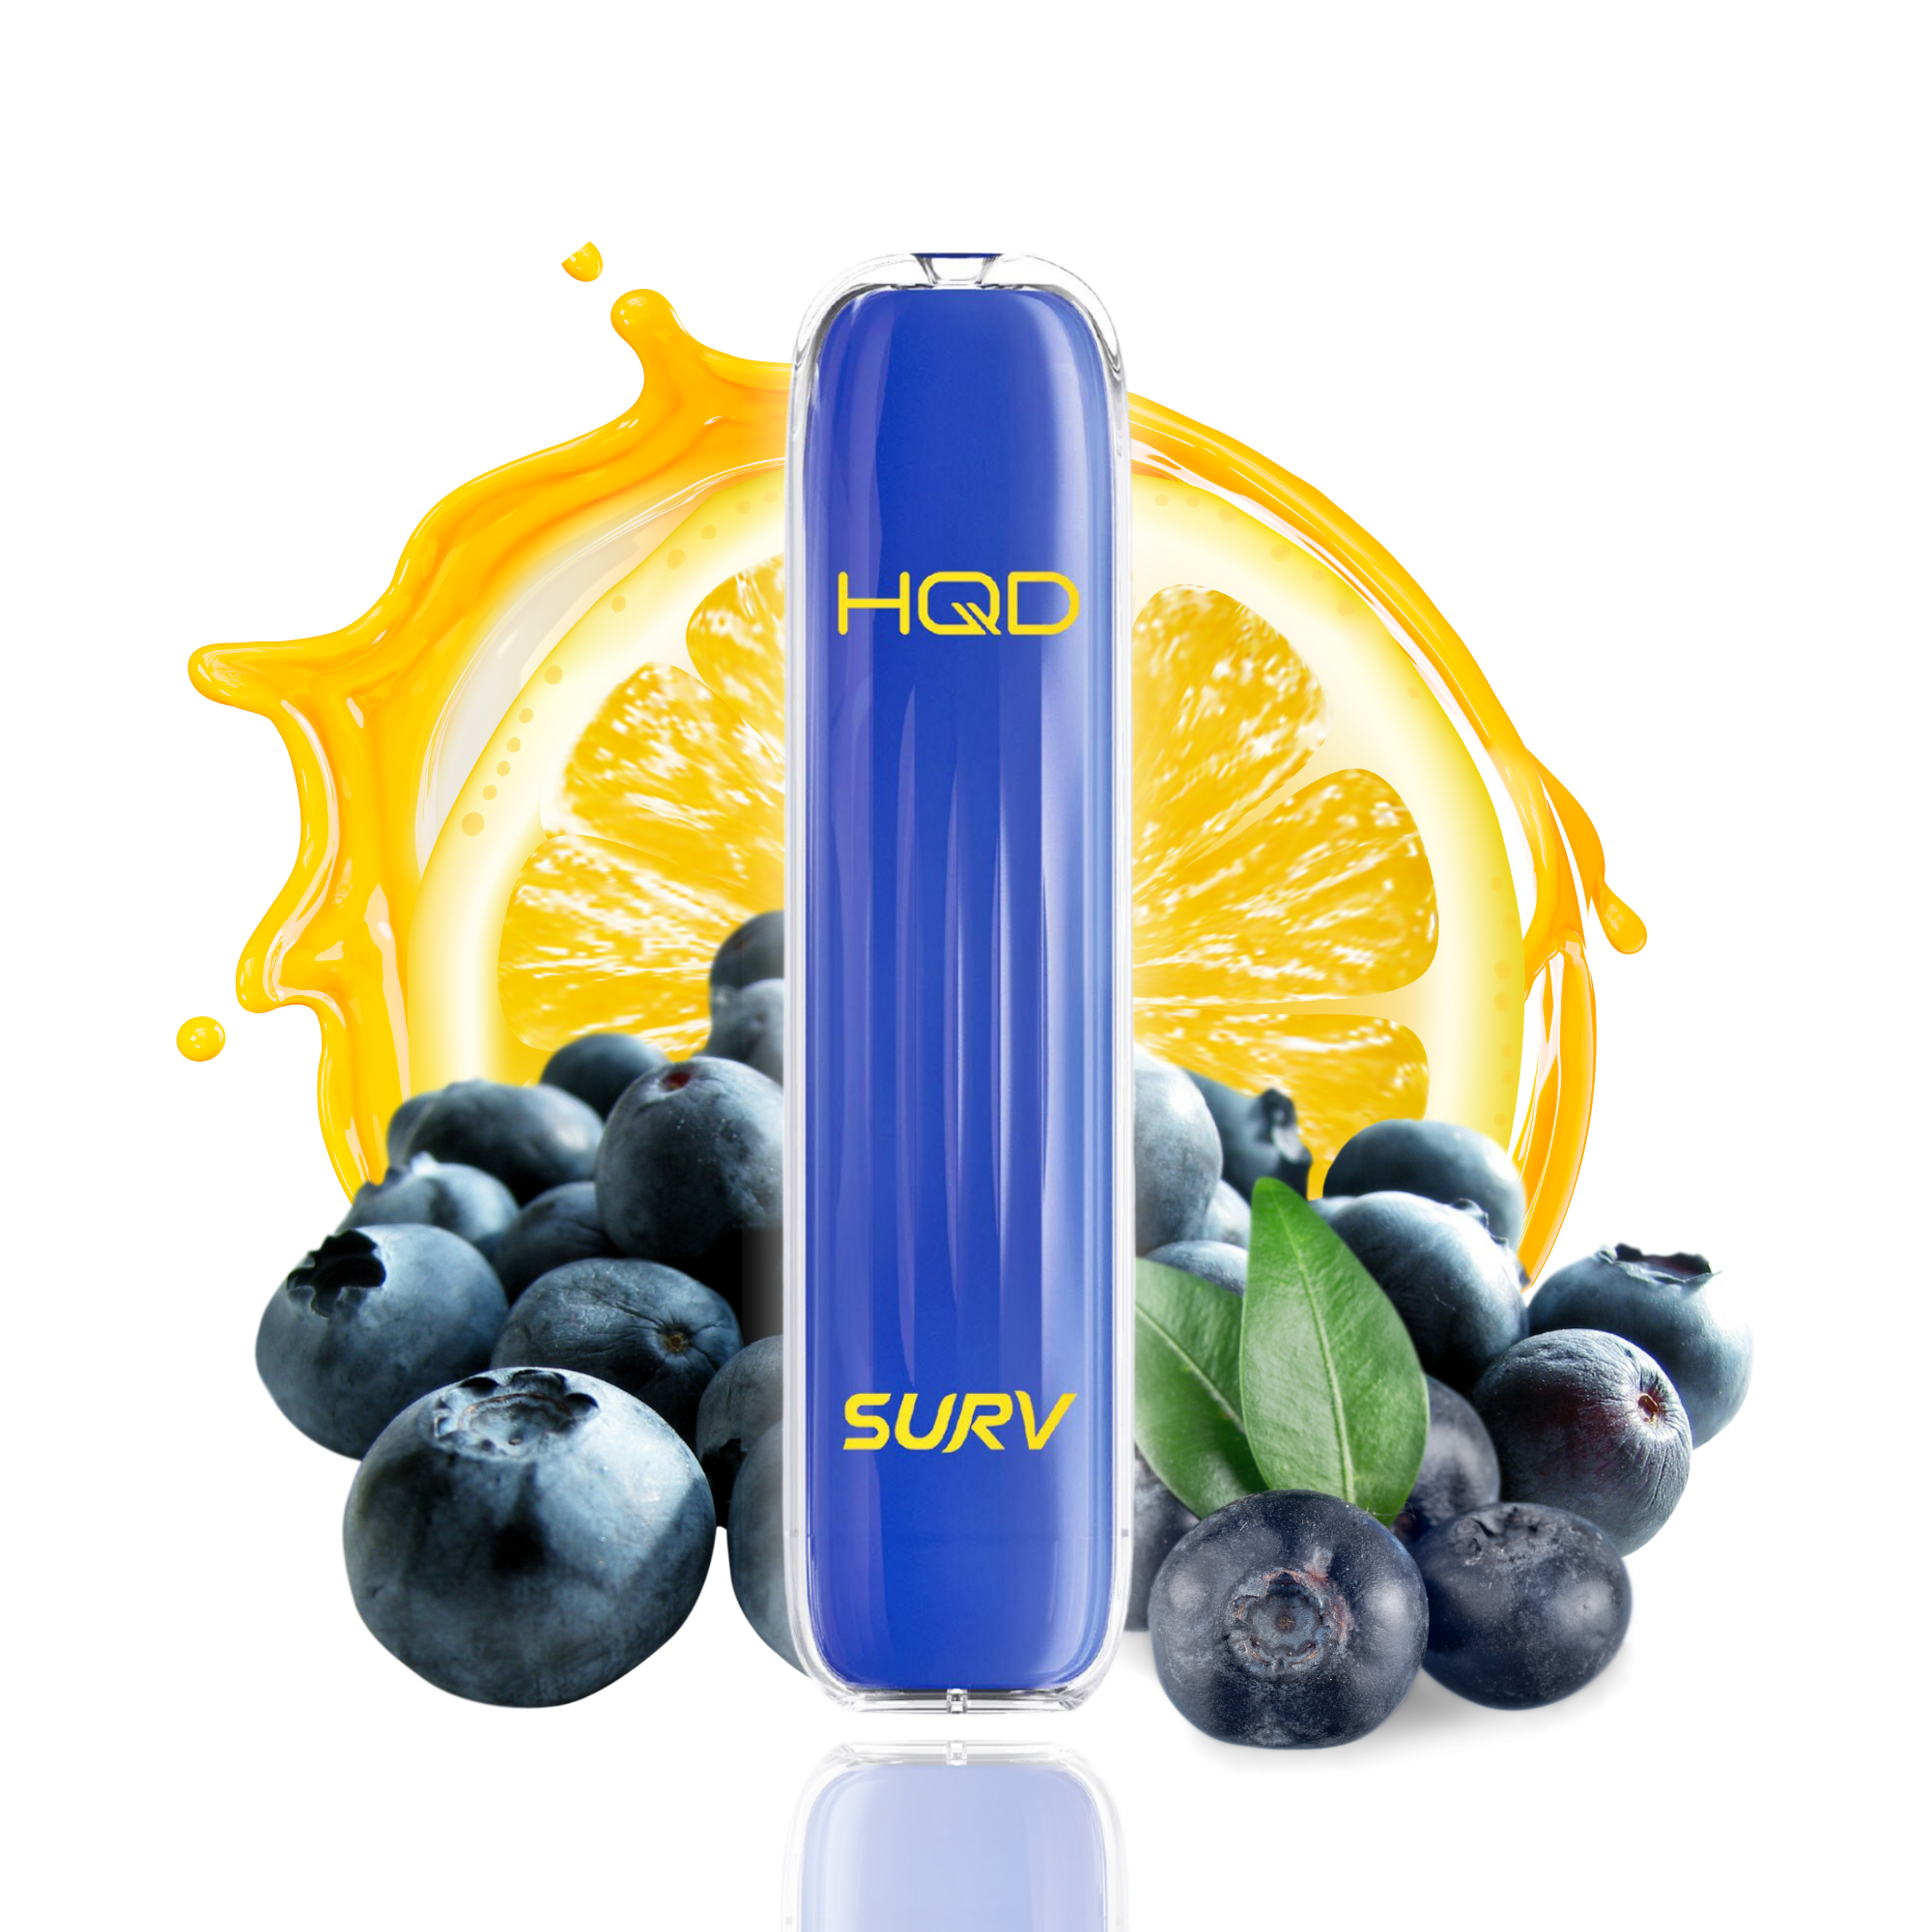 HQD Surv Blueberry Lemonade 18mg/ml